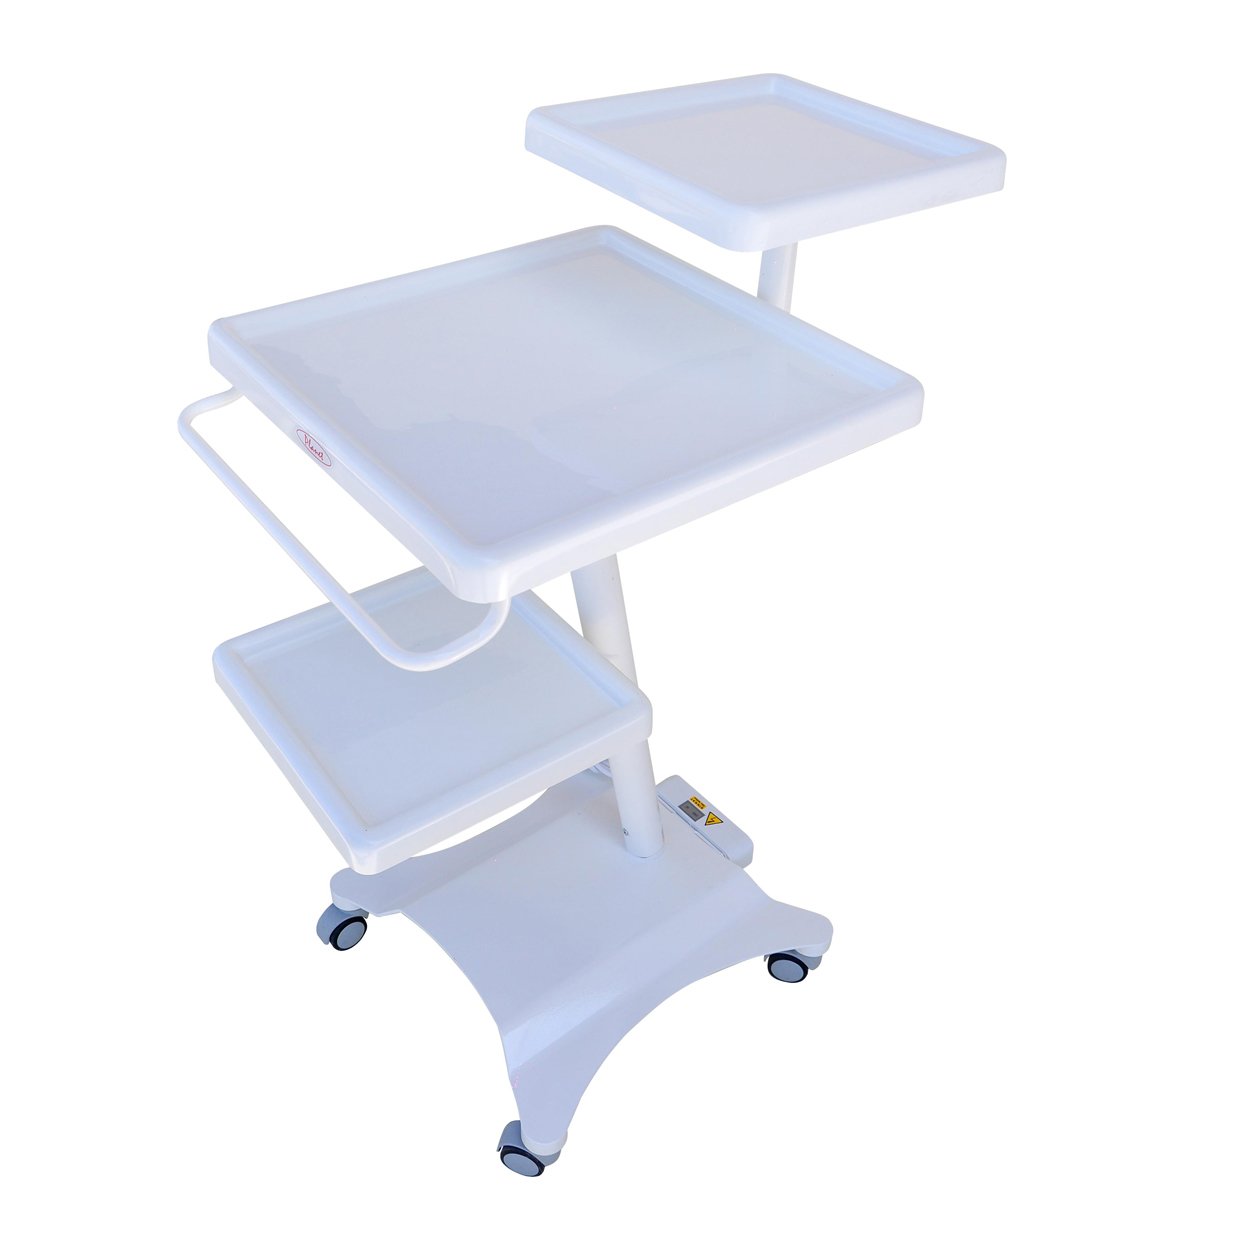 DentrealStore - Dentkonsept Moving Table - Treatment Trolley - Implant Stand - 4K